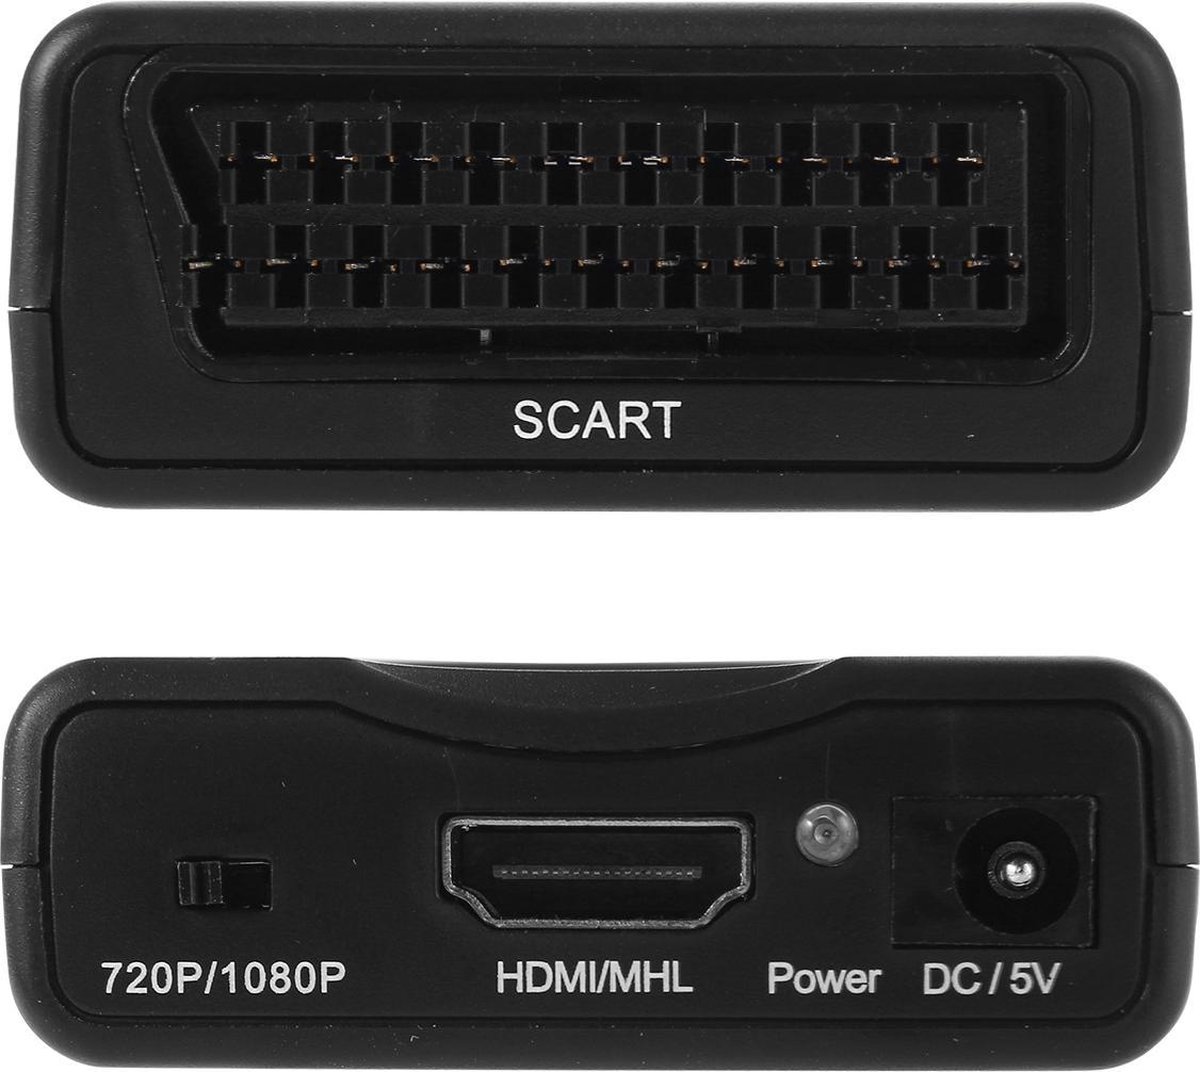 Convertisseur HDMI SCART Femelle HDMI? sortie Une voie 1080p 1.2